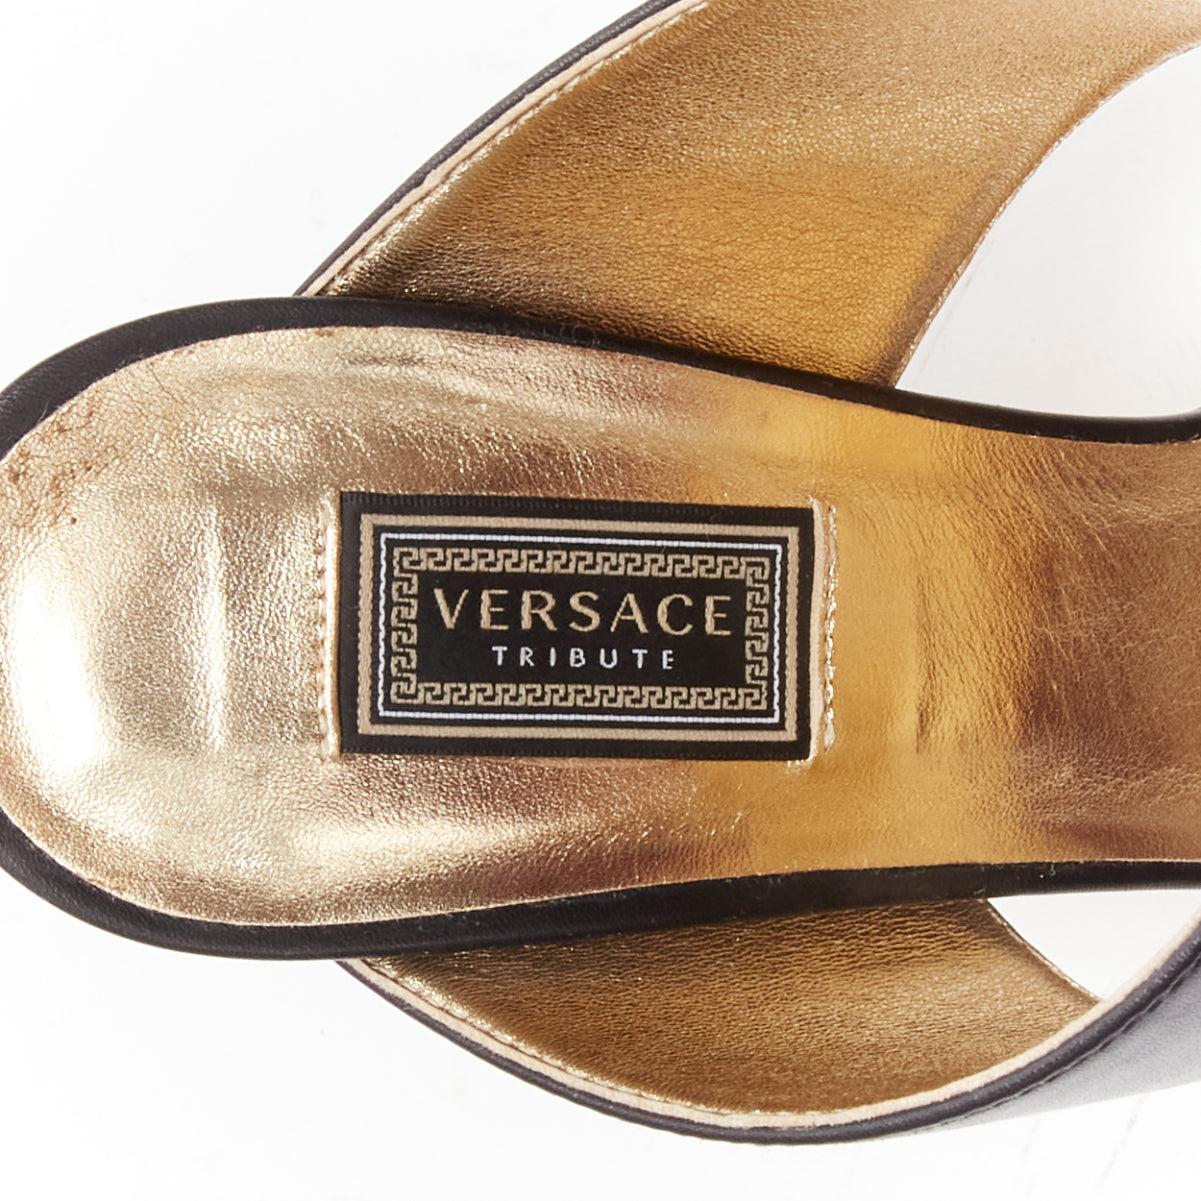 VERSACE Tribute gold Medusa buckle black double strap high heel mule sandals For Sale 3